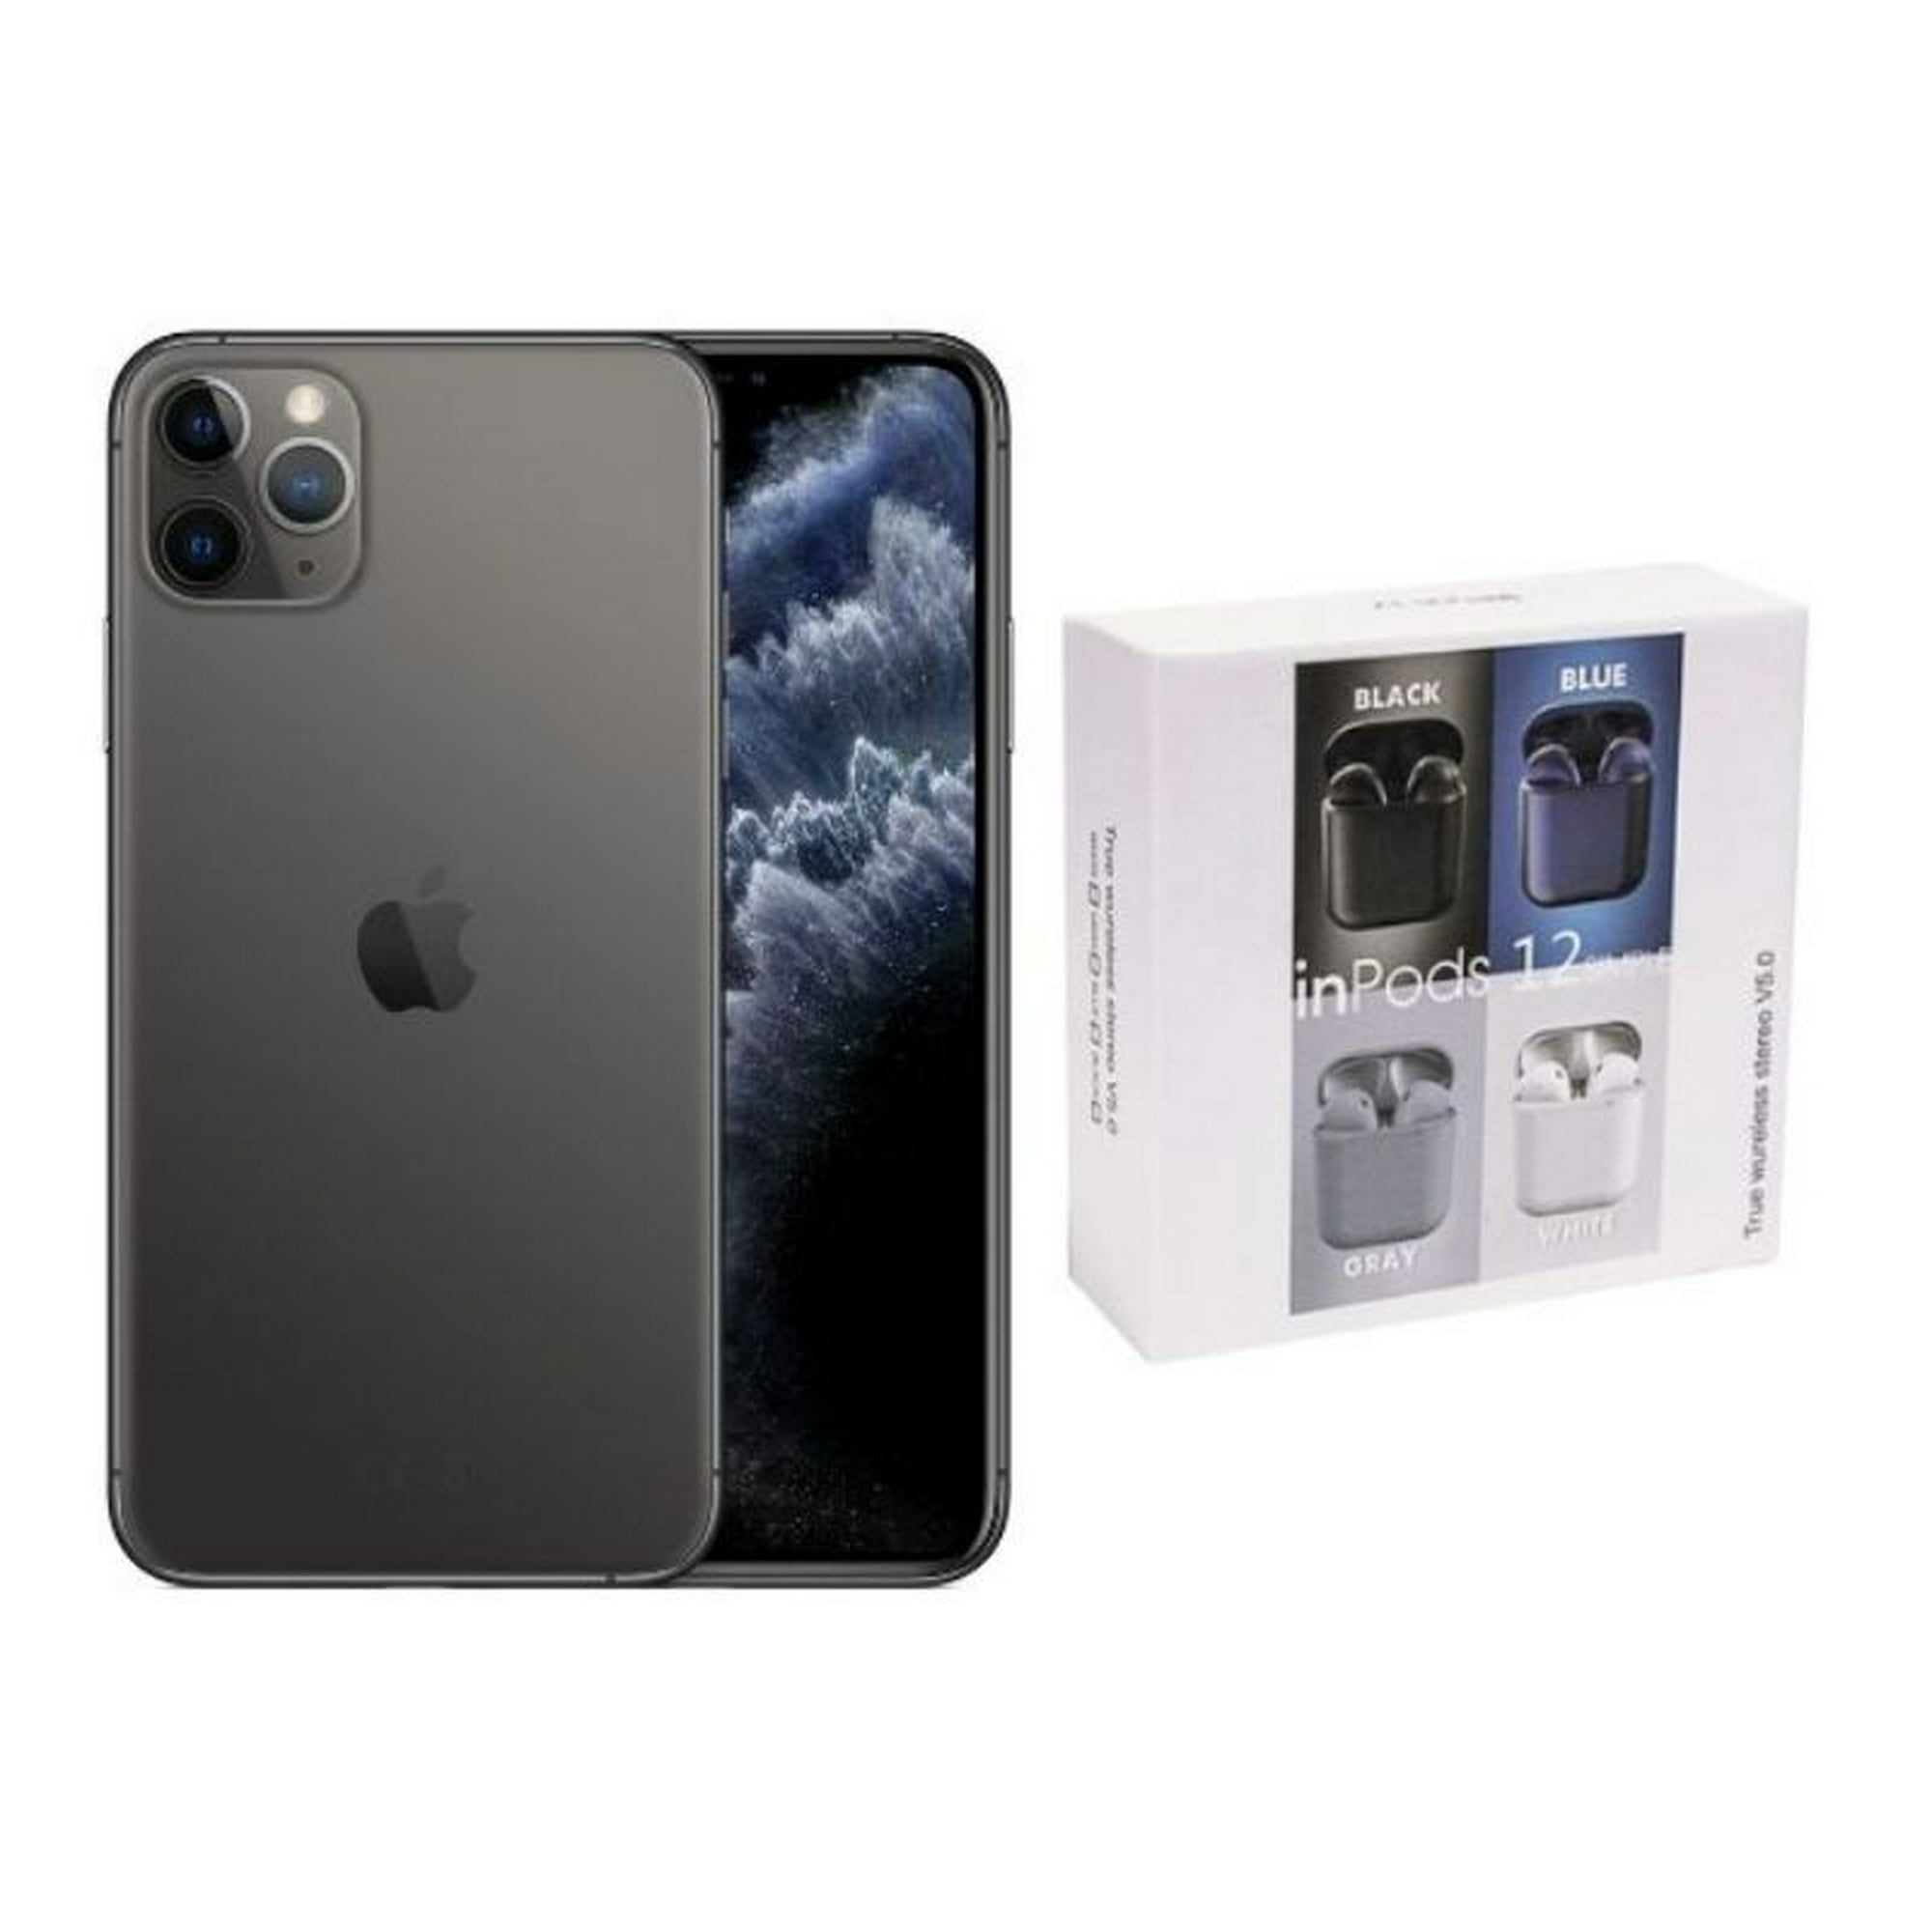 iPhone 11 Pro Reacondicionado Grado A 64gb + Power Bank 10,000mah